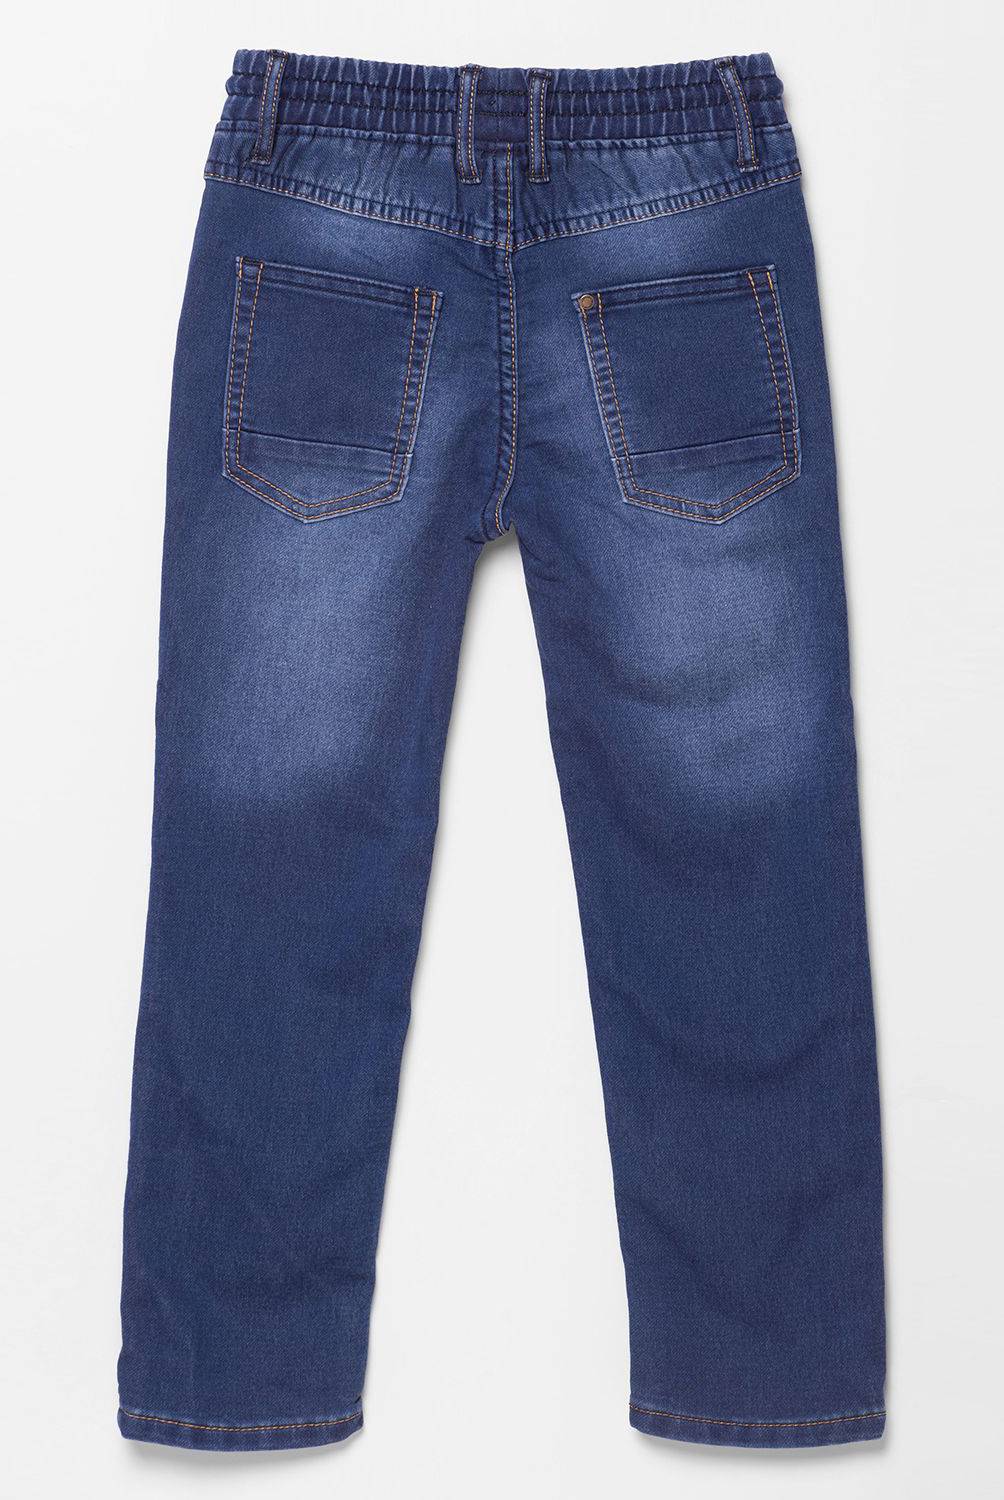 YAMP - Jeans Cintura Elásticada Algodón Niño